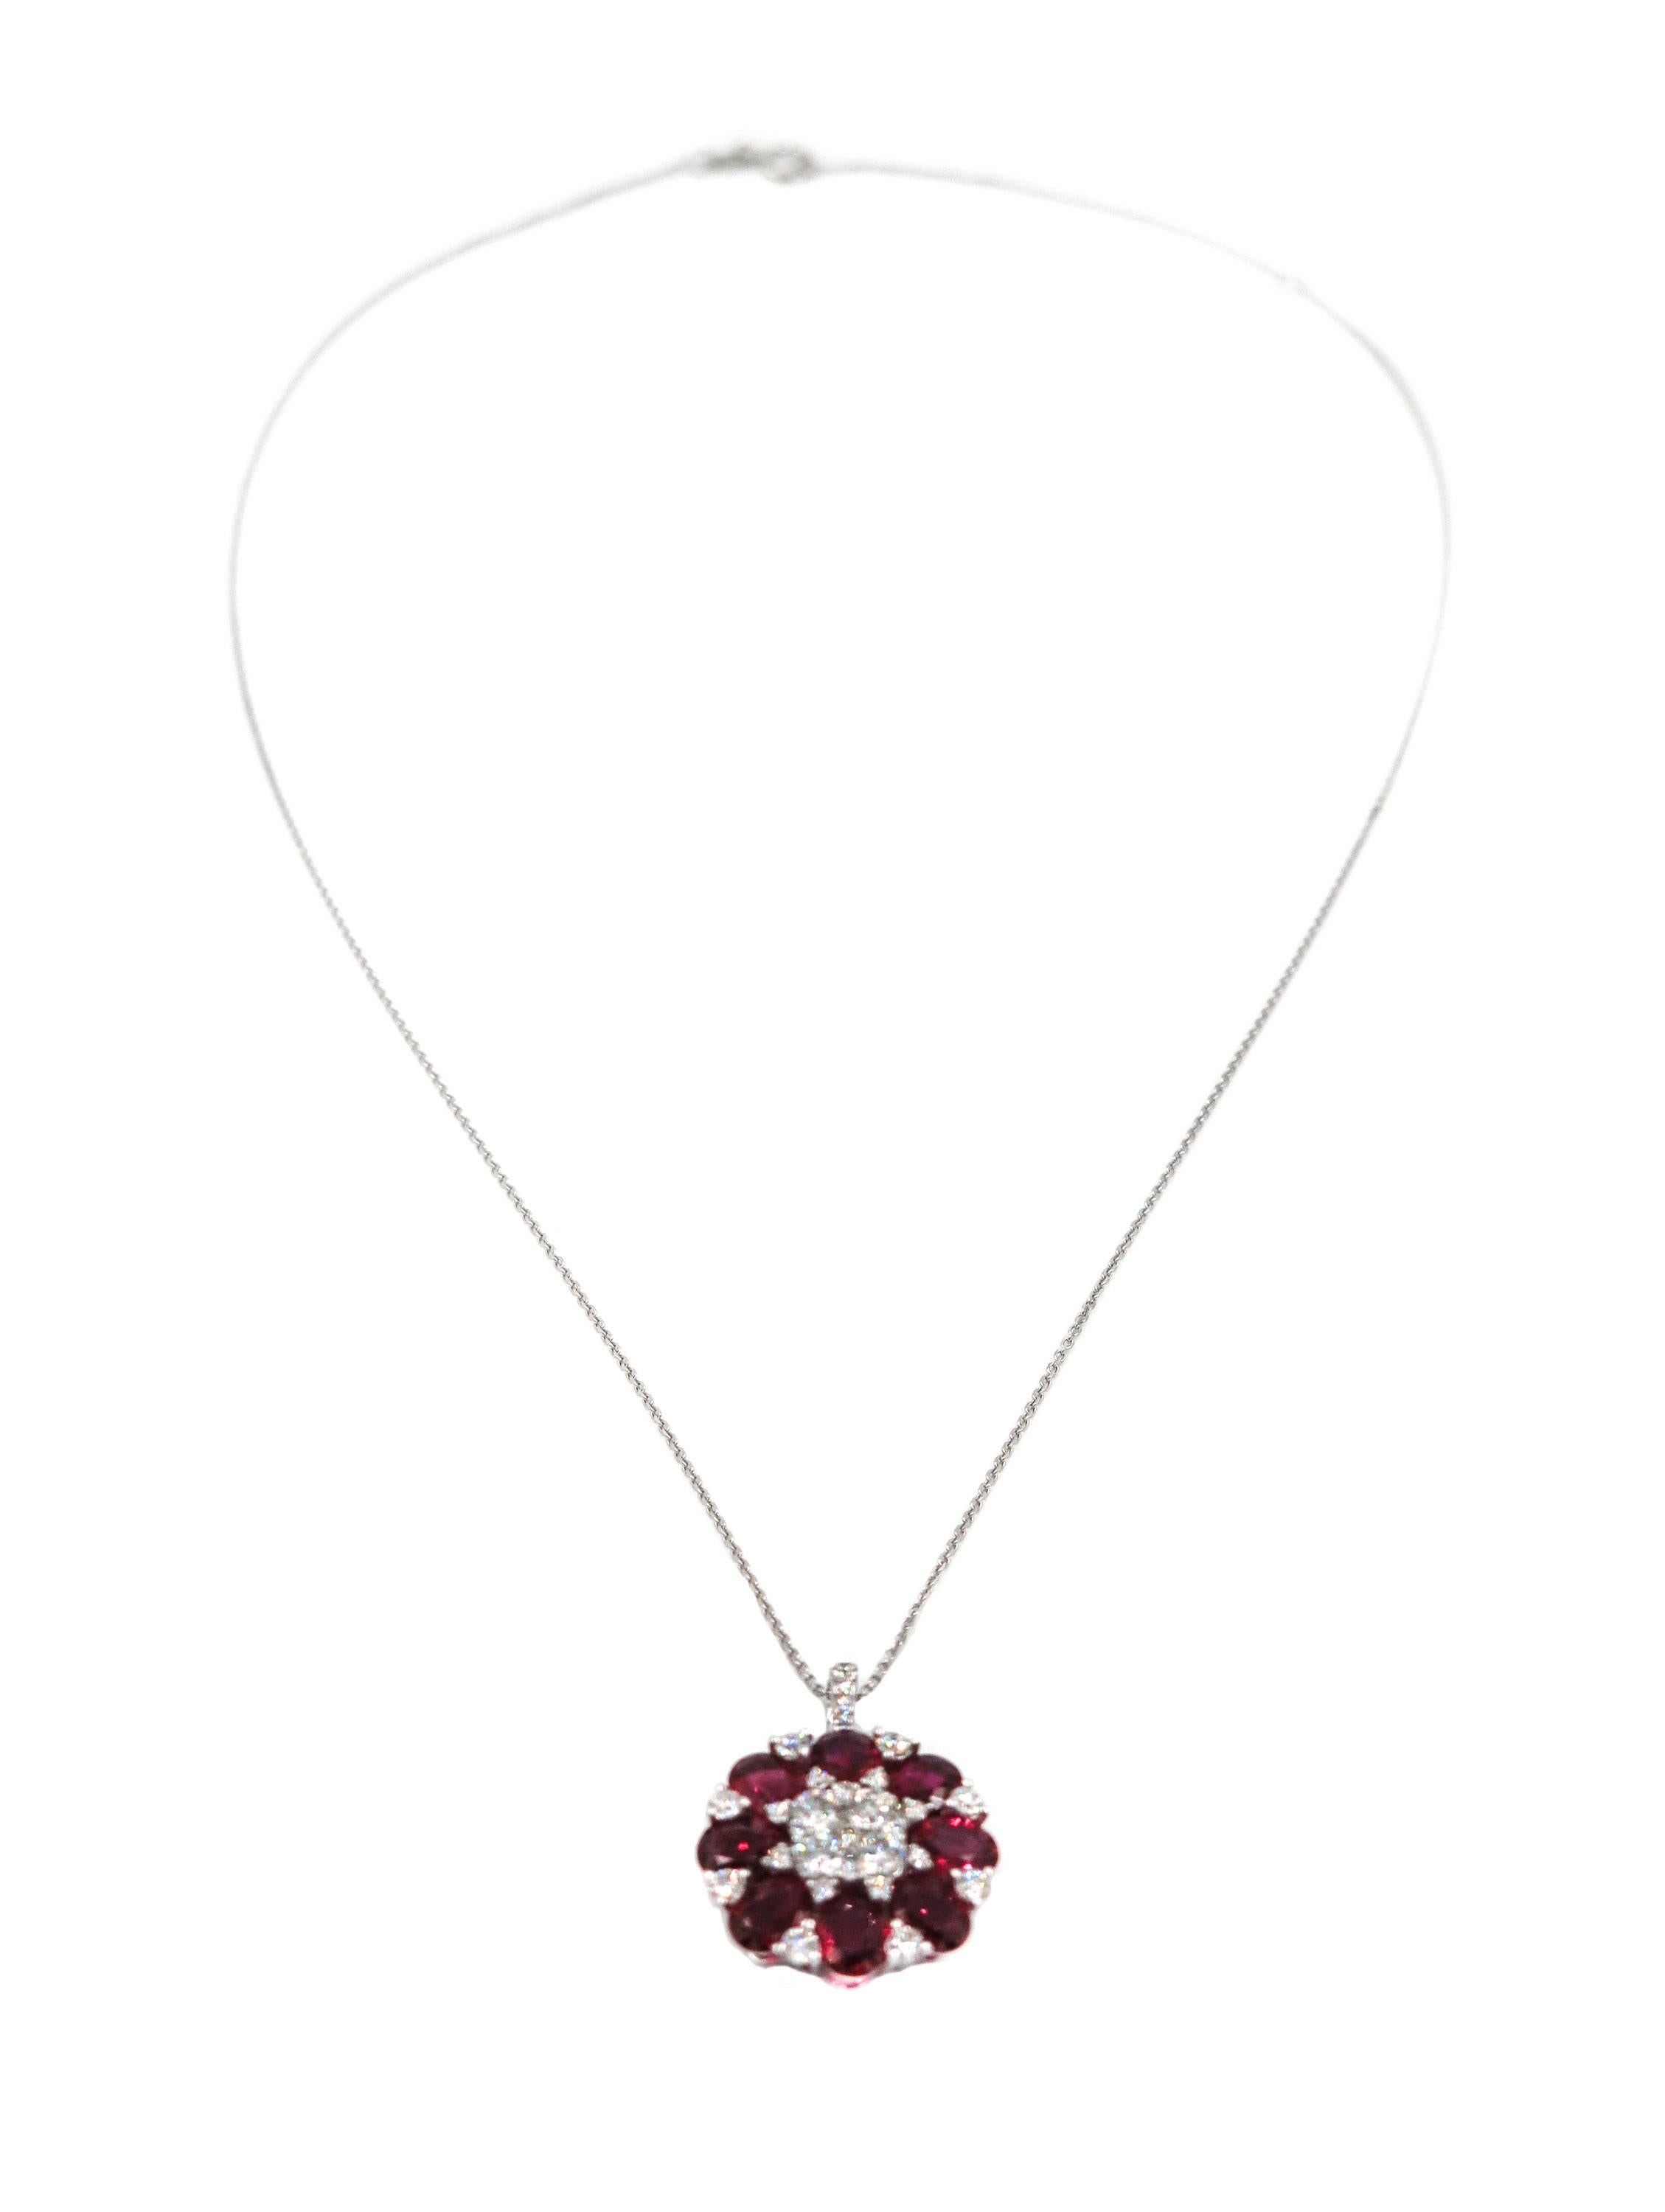 Modern Ruby and Diamond White Gold Pendant